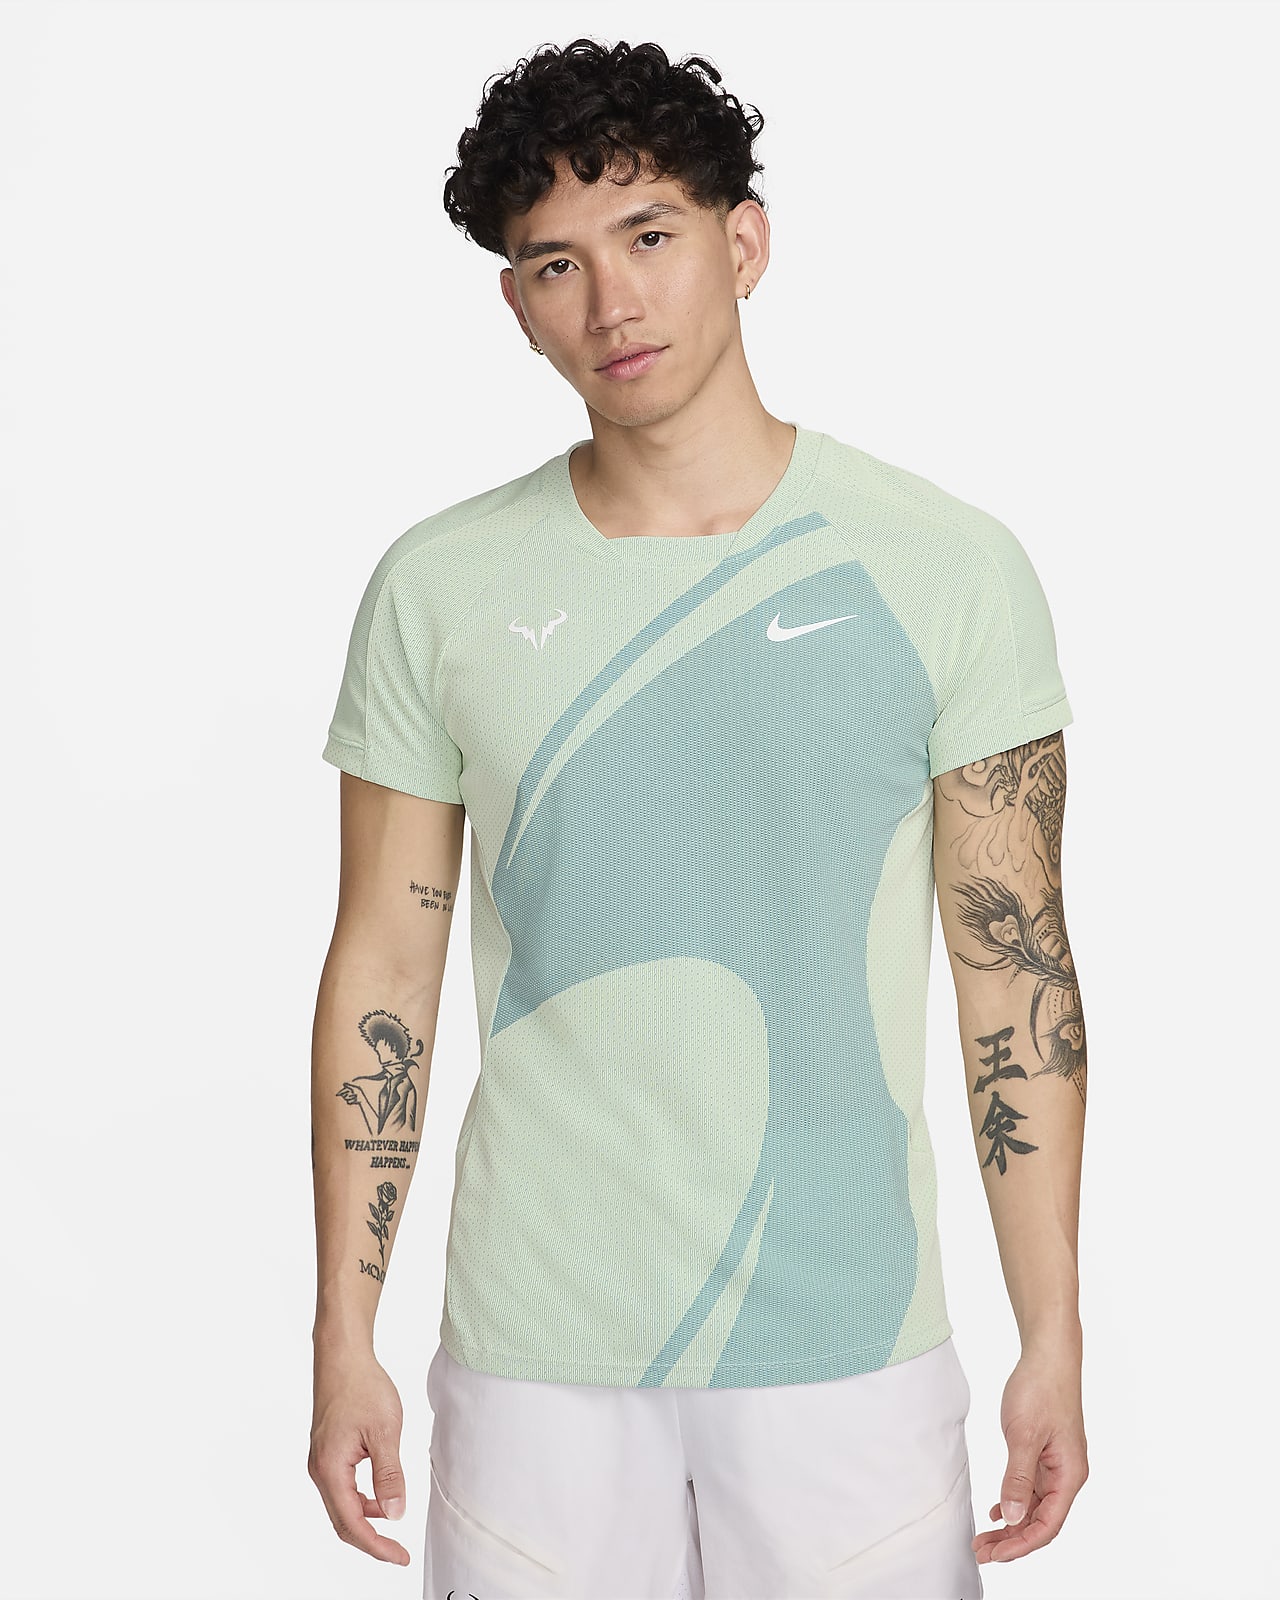 Rafa Men's Nike Dri-FIT ADV Short-Sleeve Tennis Top